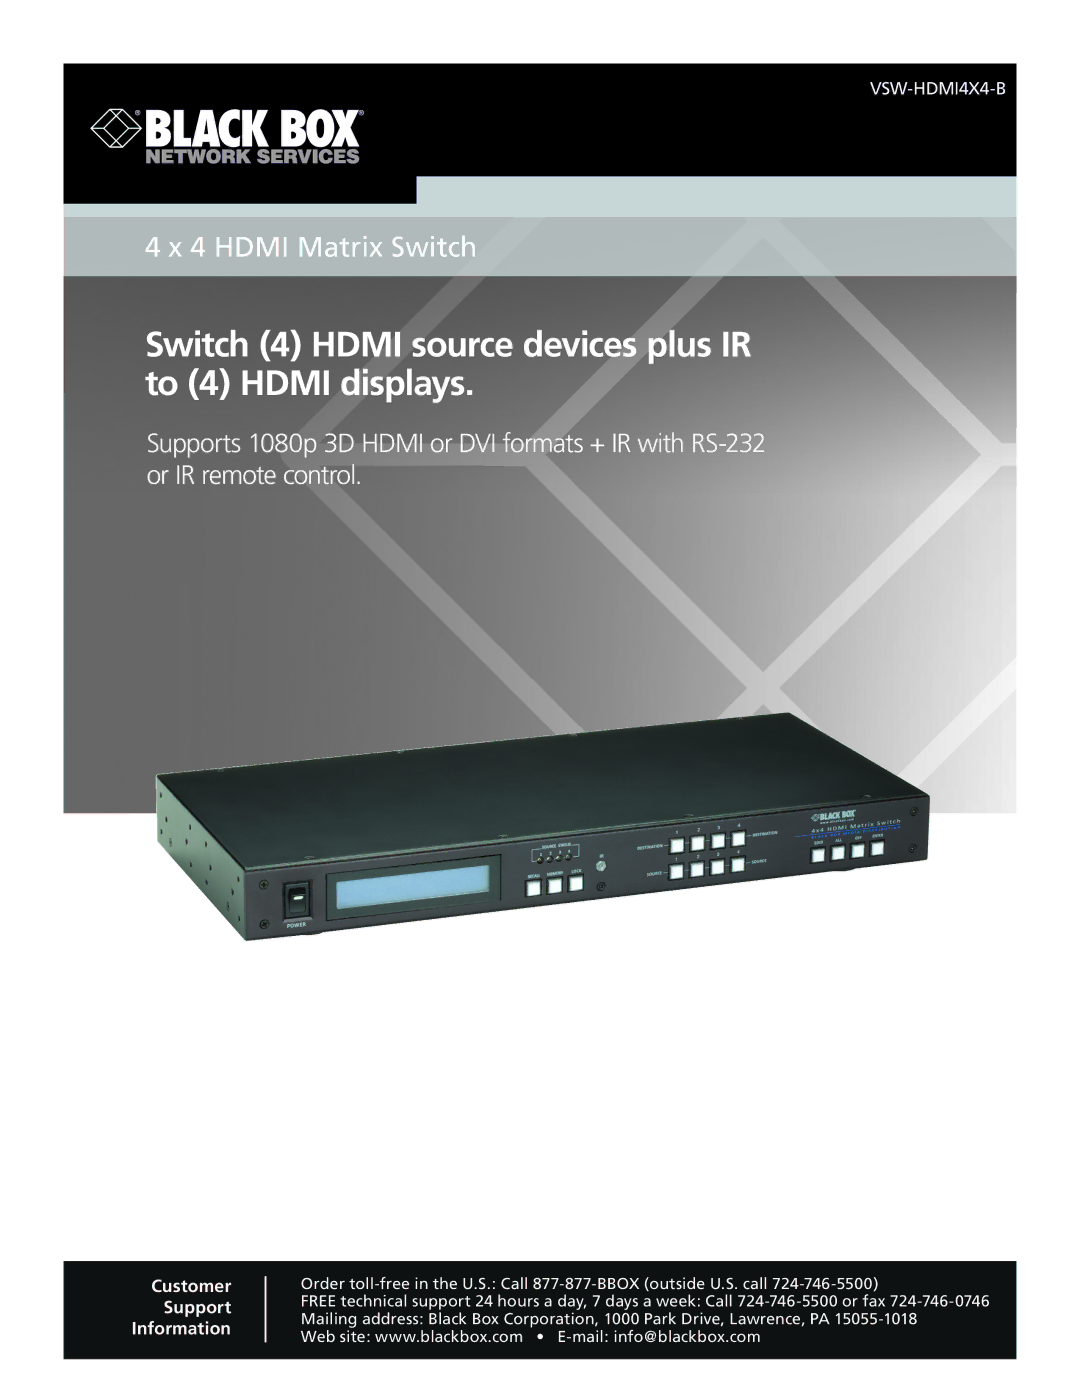 Black Box 4 x 4 HDMI Matrix Switch, VSW-HDMI4X4-B manual Switch 4 Hdmi source devices plus IR to 4 Hdmi displays 